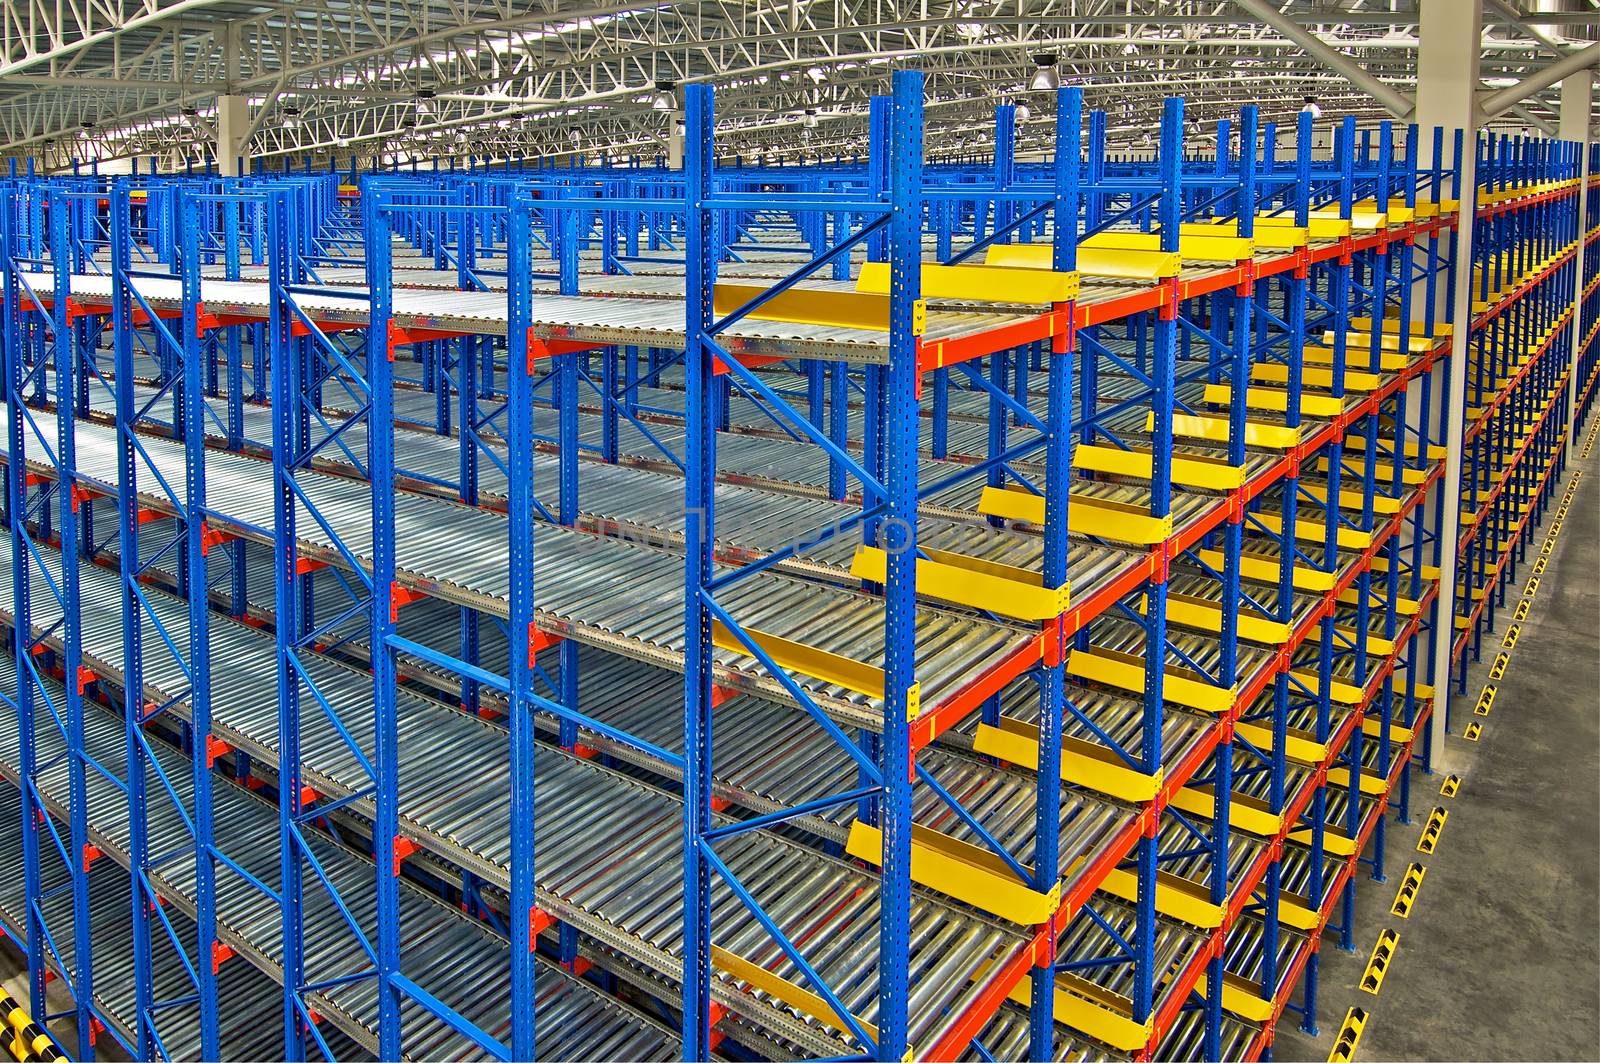 Storage racking pallet system for warehouse metal shelving distribution center